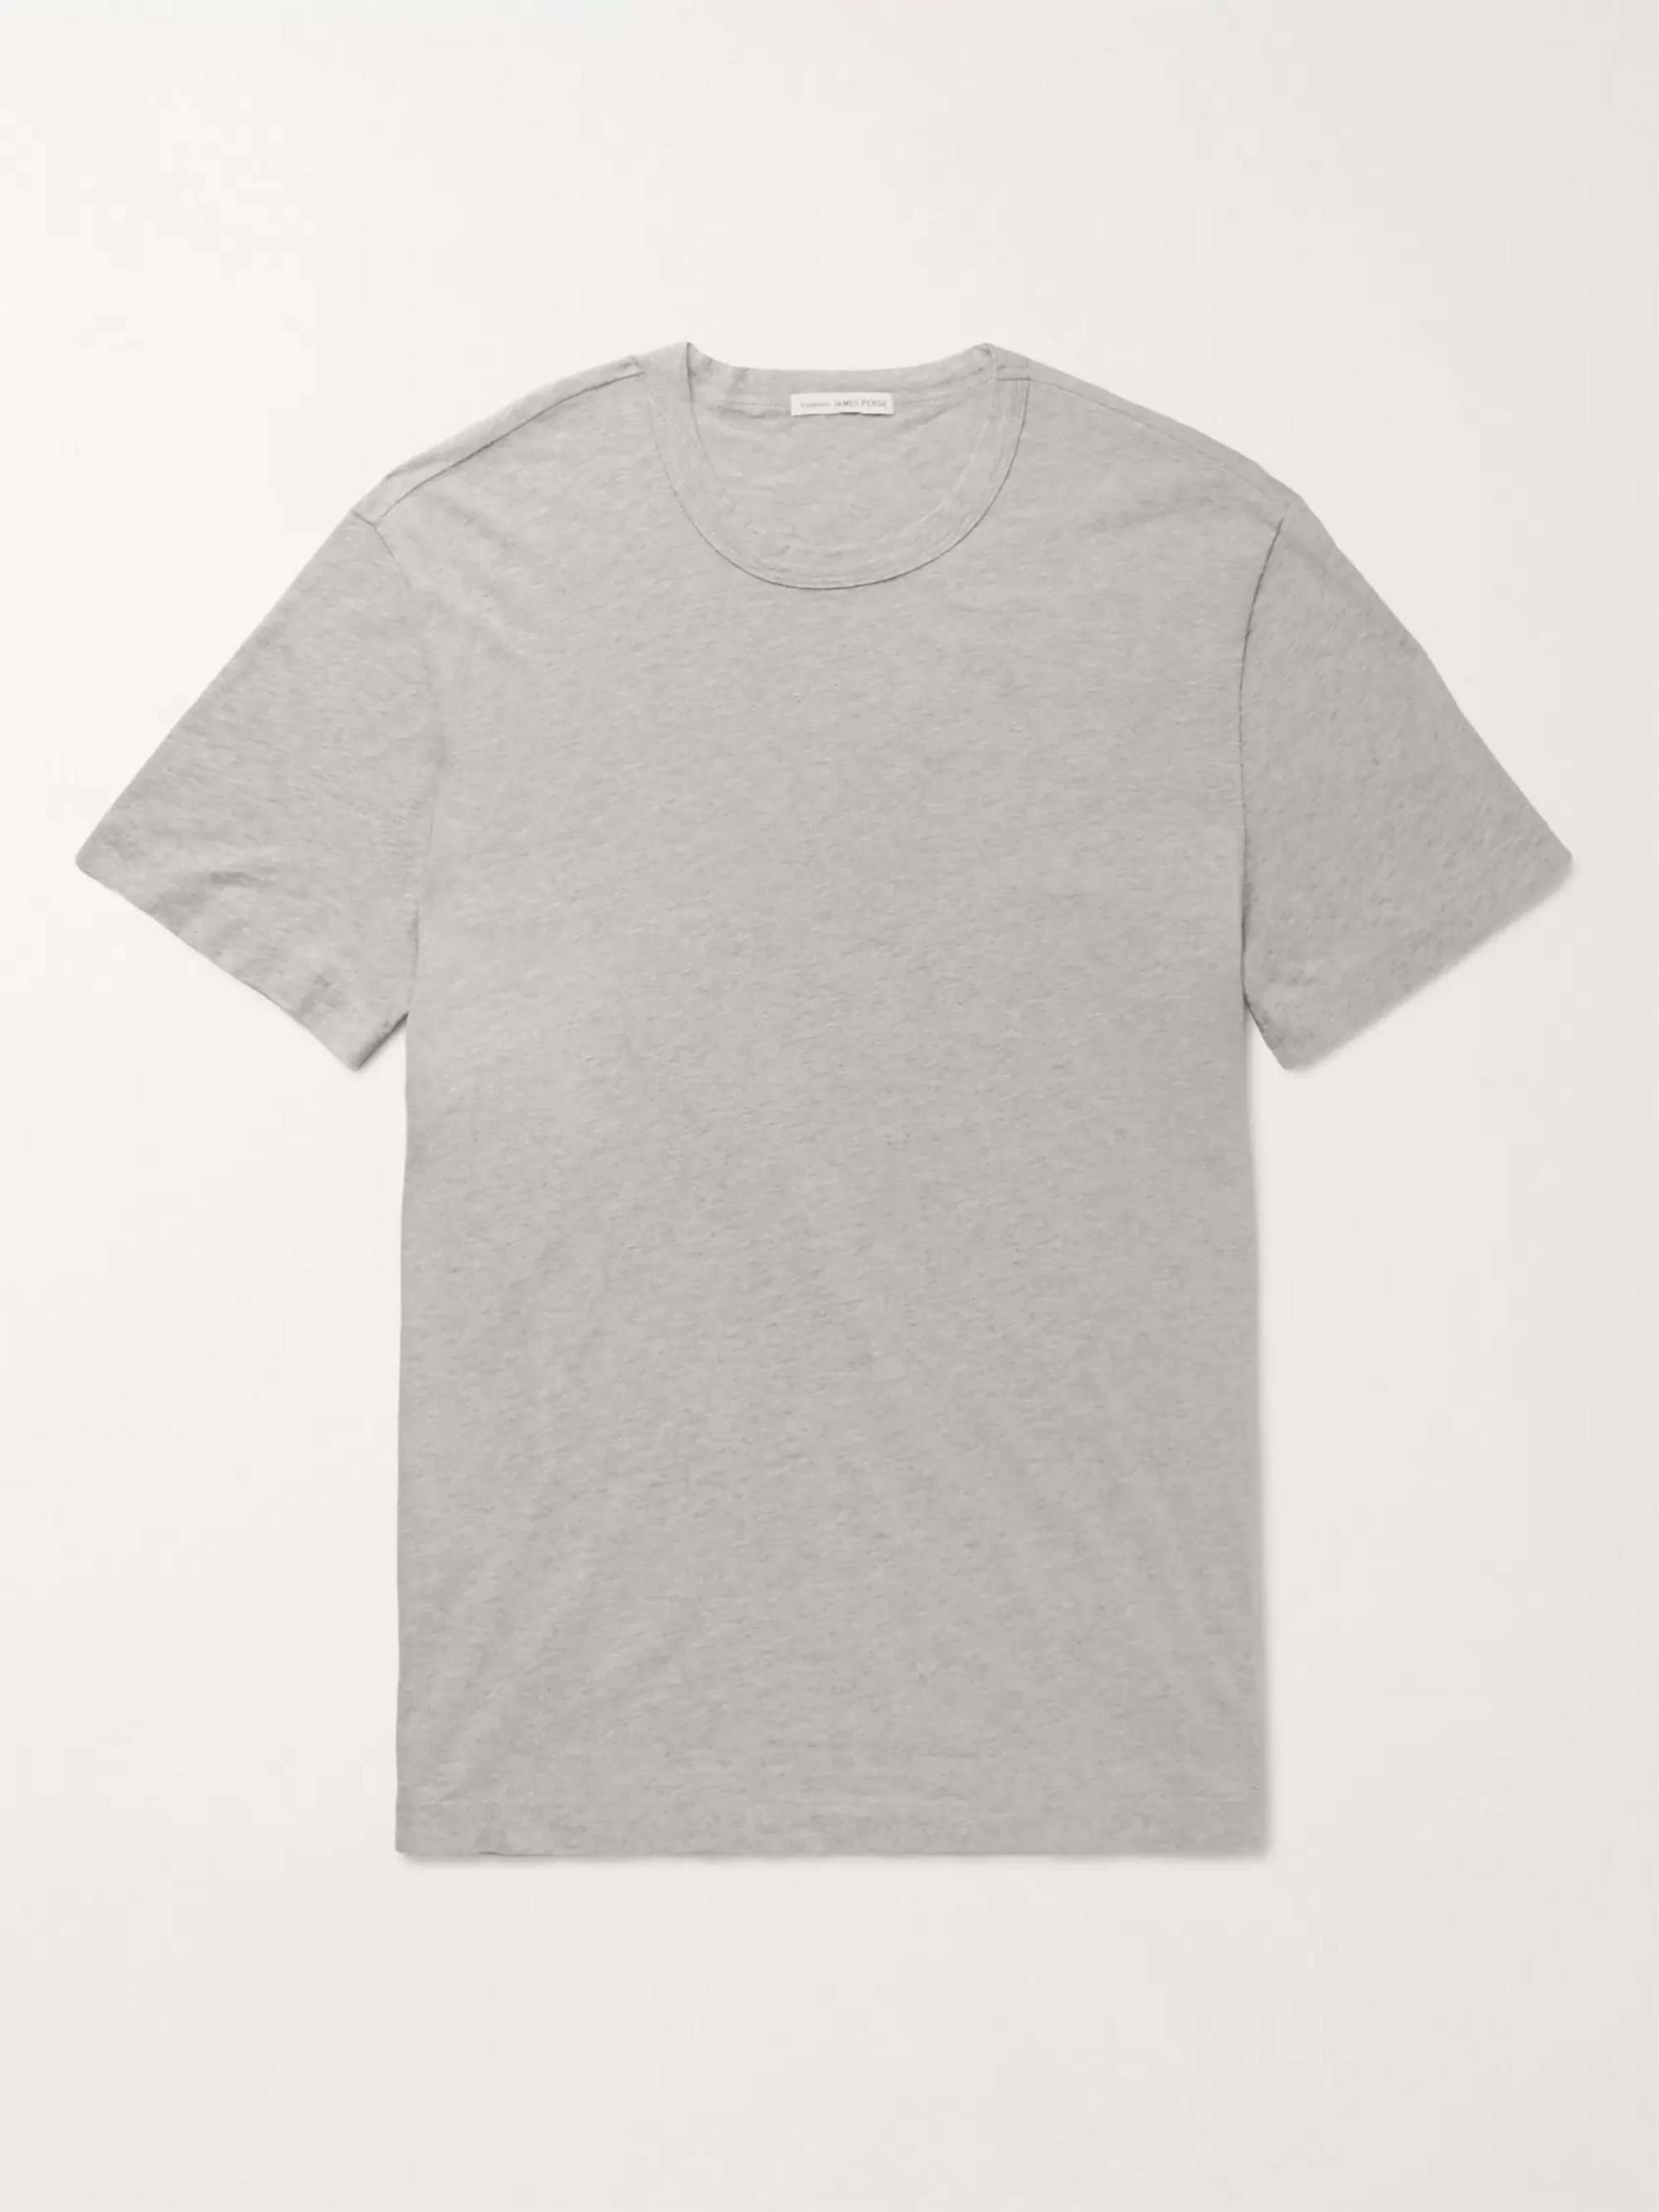 JAMES PERSE Slim-Fit Cotton-Jersey T-Shirt | MR PORTER